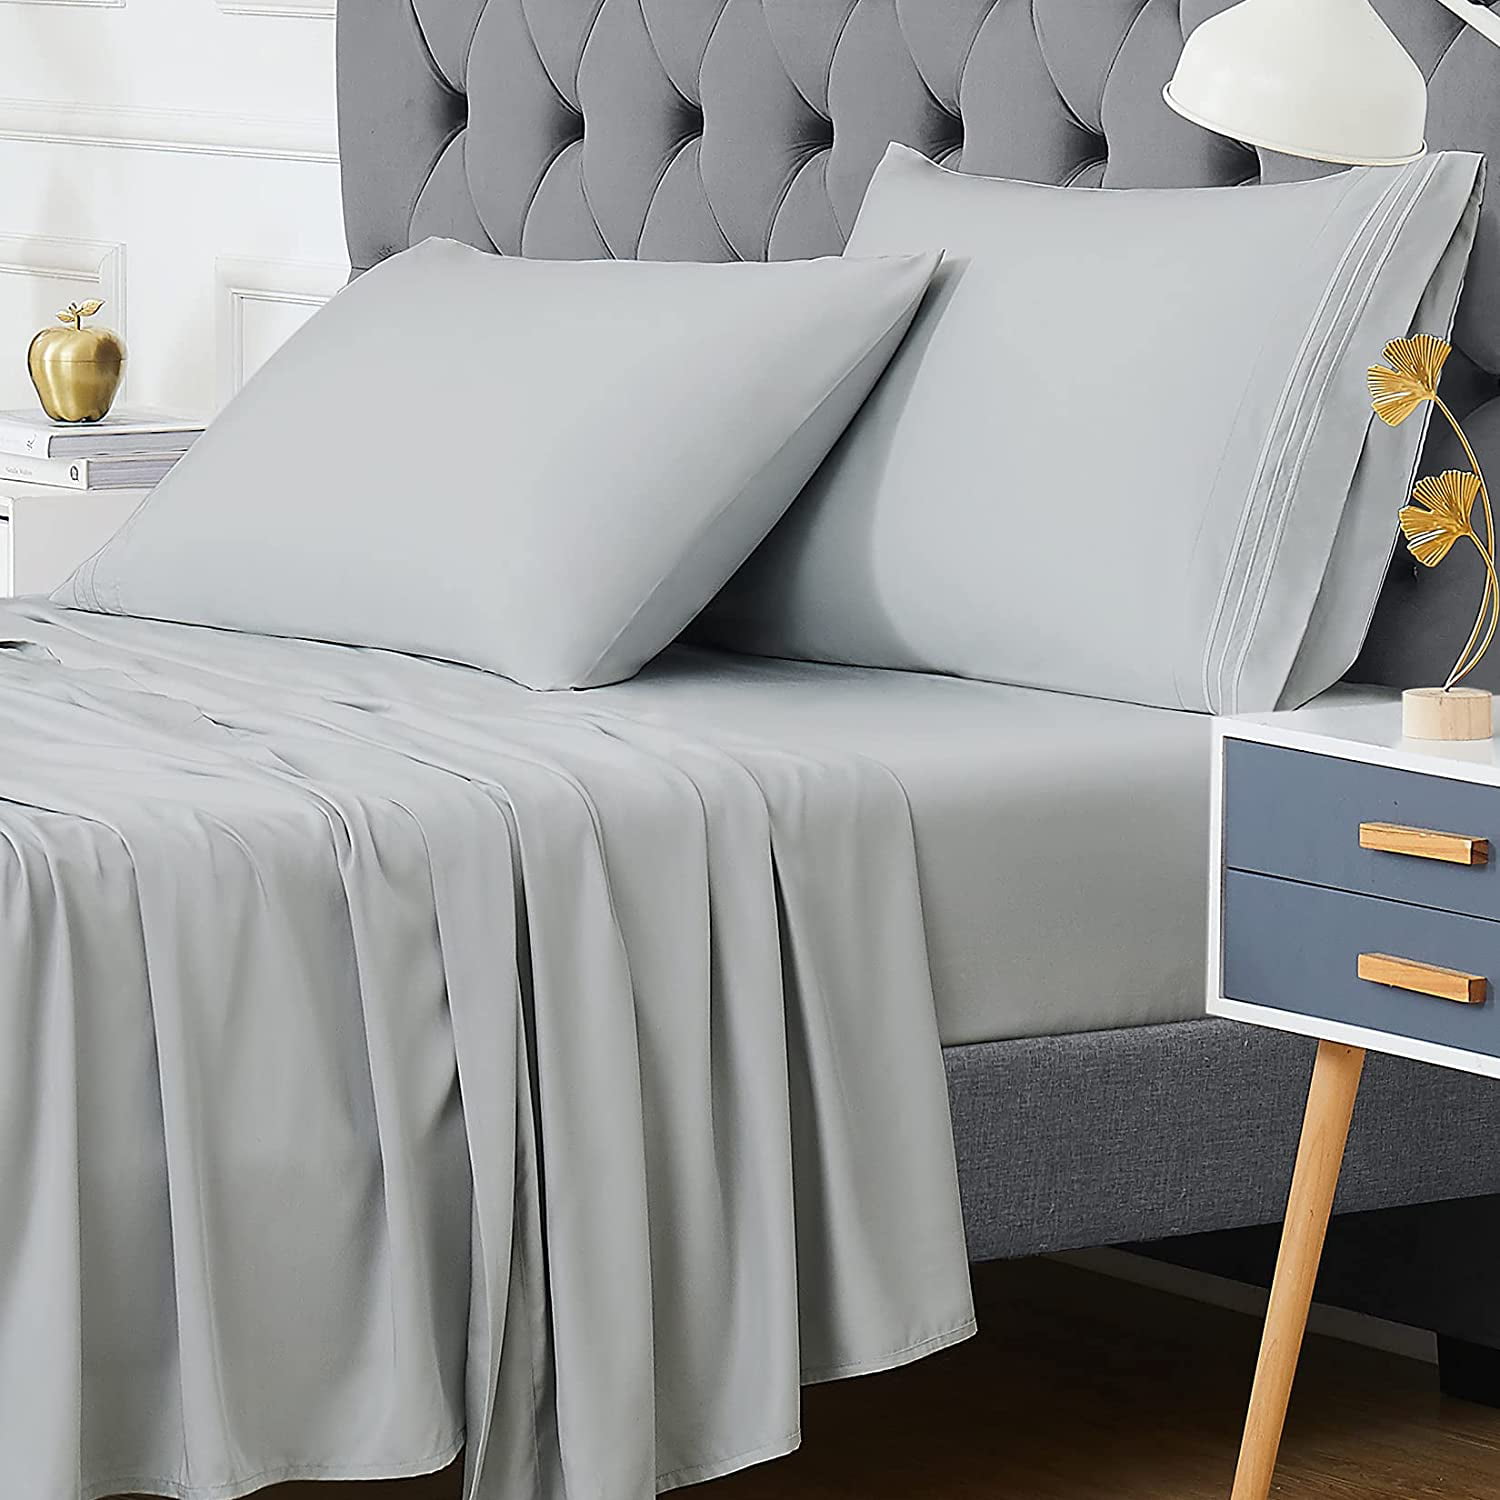 100% Organic Bamboo Cooling Bed Sheets Set  Ultra Soft Luxury Deep Pocket Sheet 